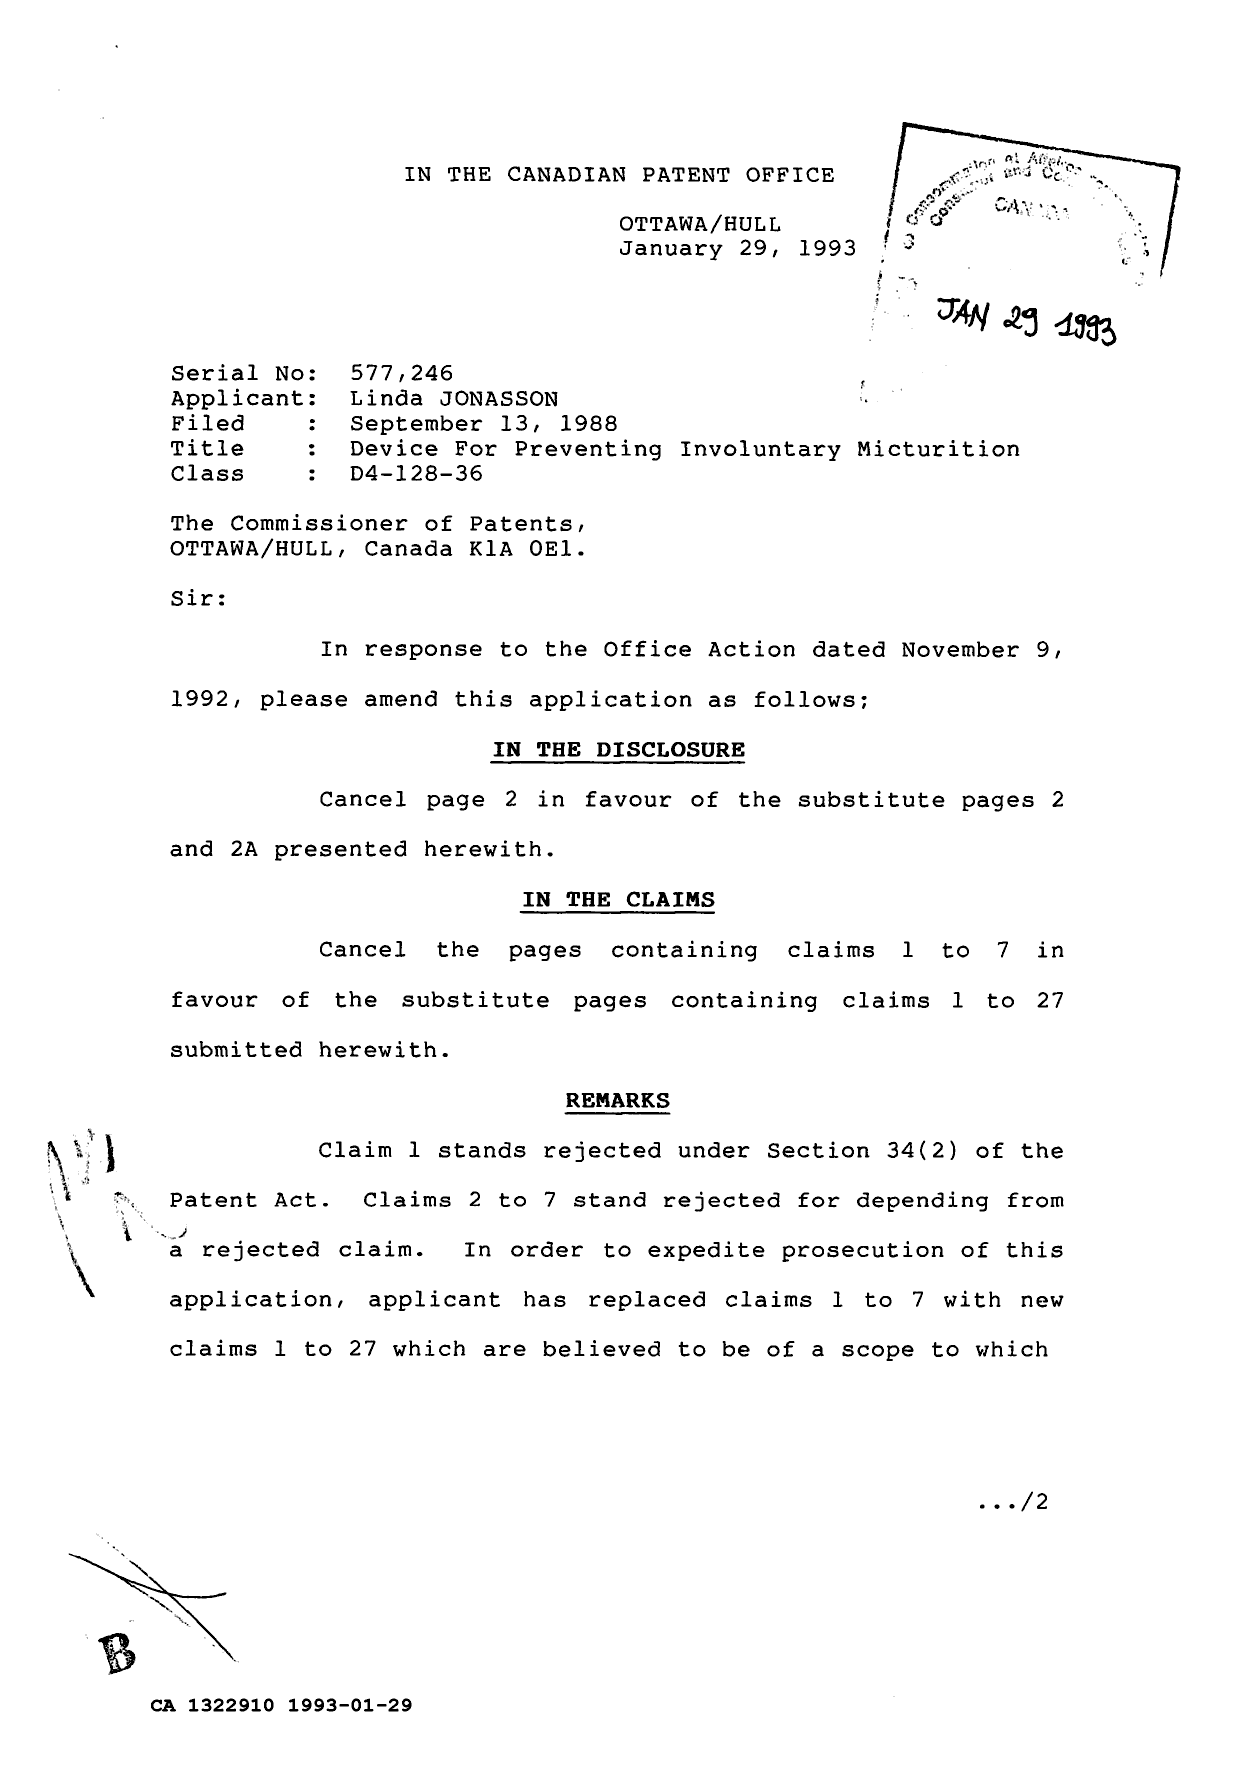 Canadian Patent Document 1322910. Prosecution Correspondence 19930129. Image 1 of 2